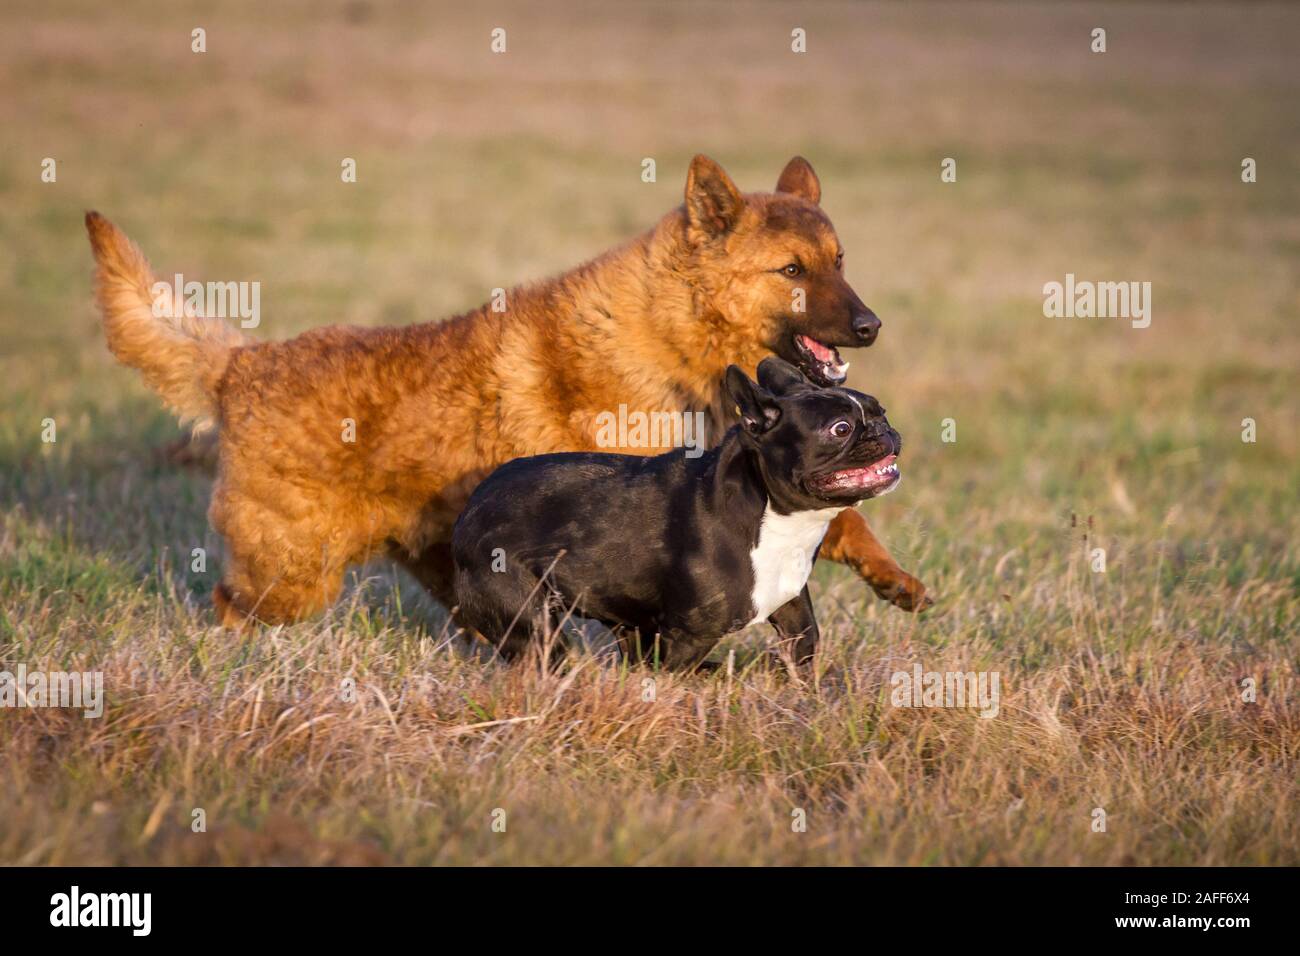 french bulldog and german shepherd